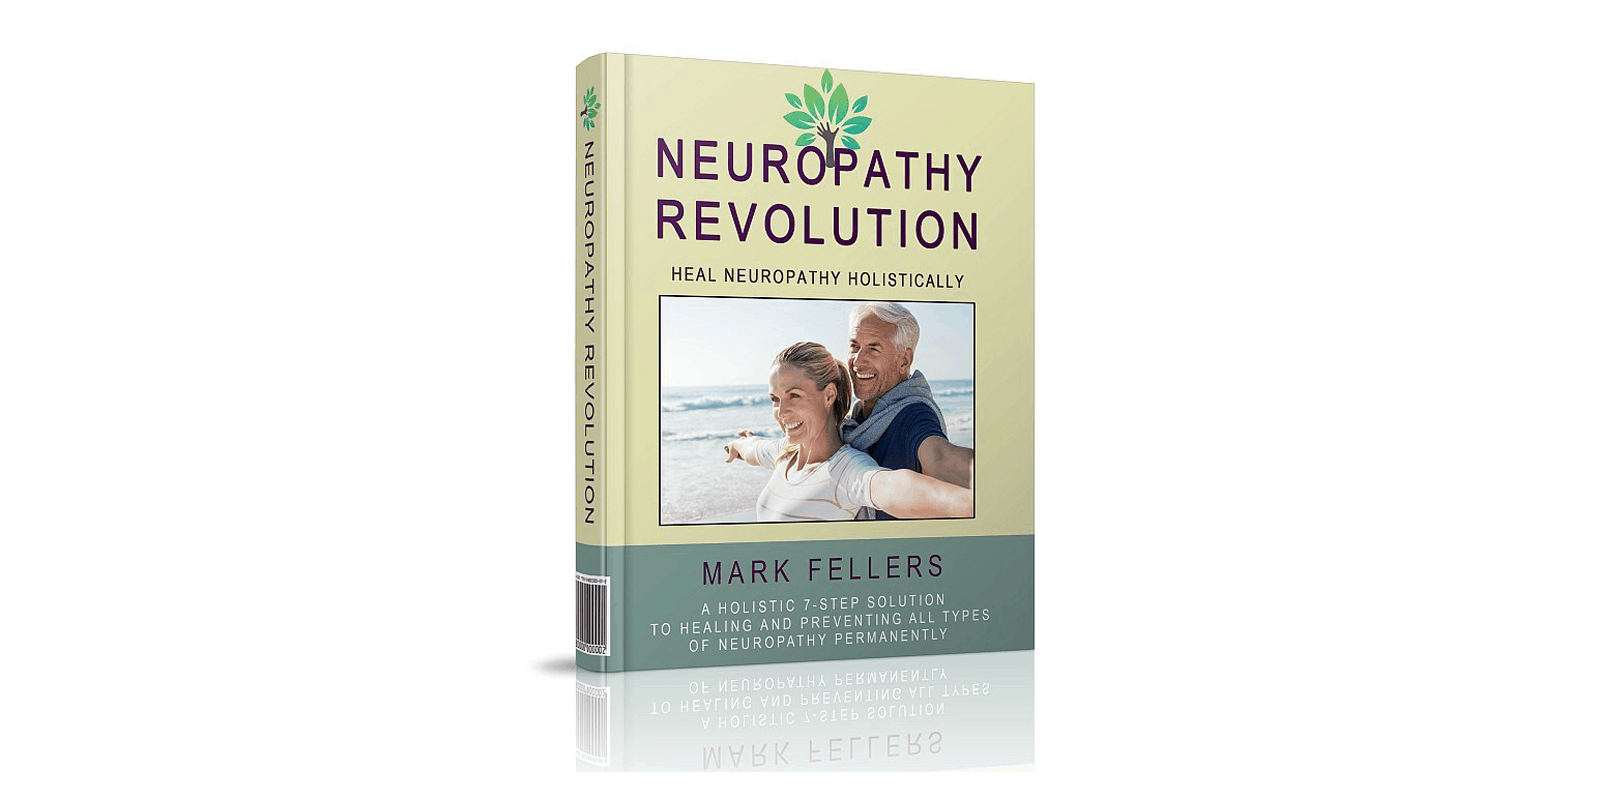 Neuropathy Revolution Reviews